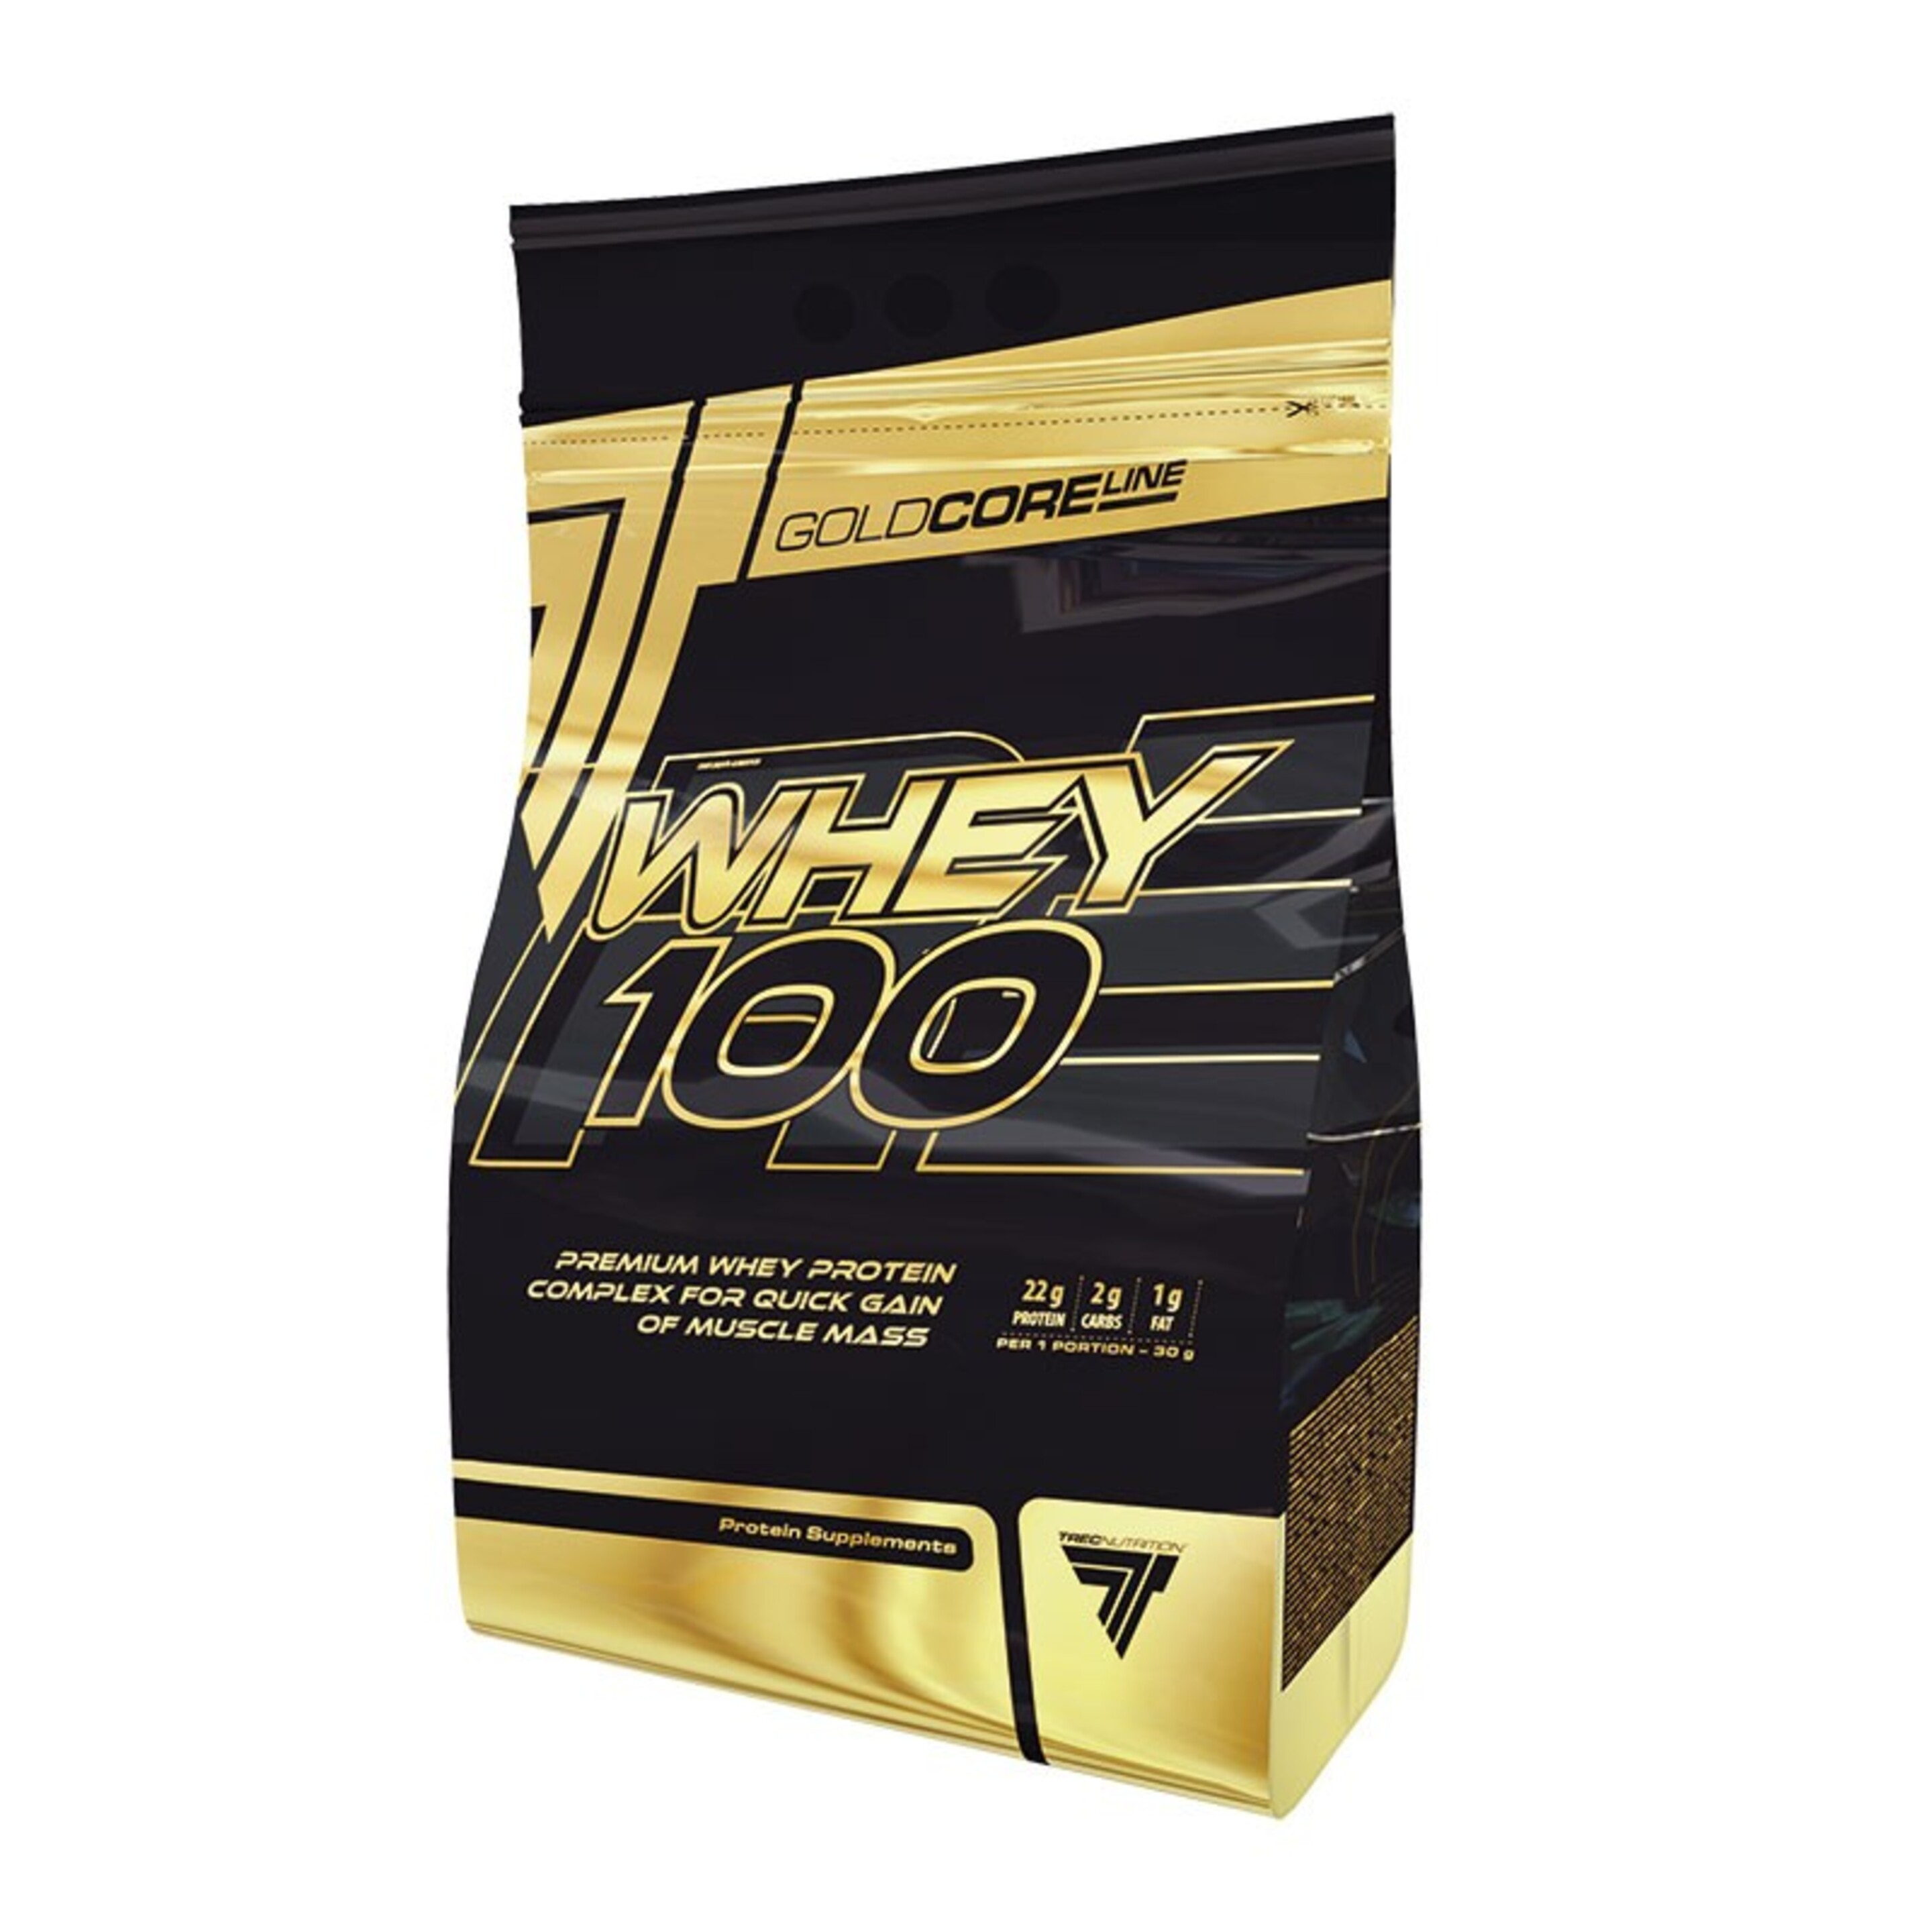 Gold Core Whey 100 - 2275g - Chocolate -  - 